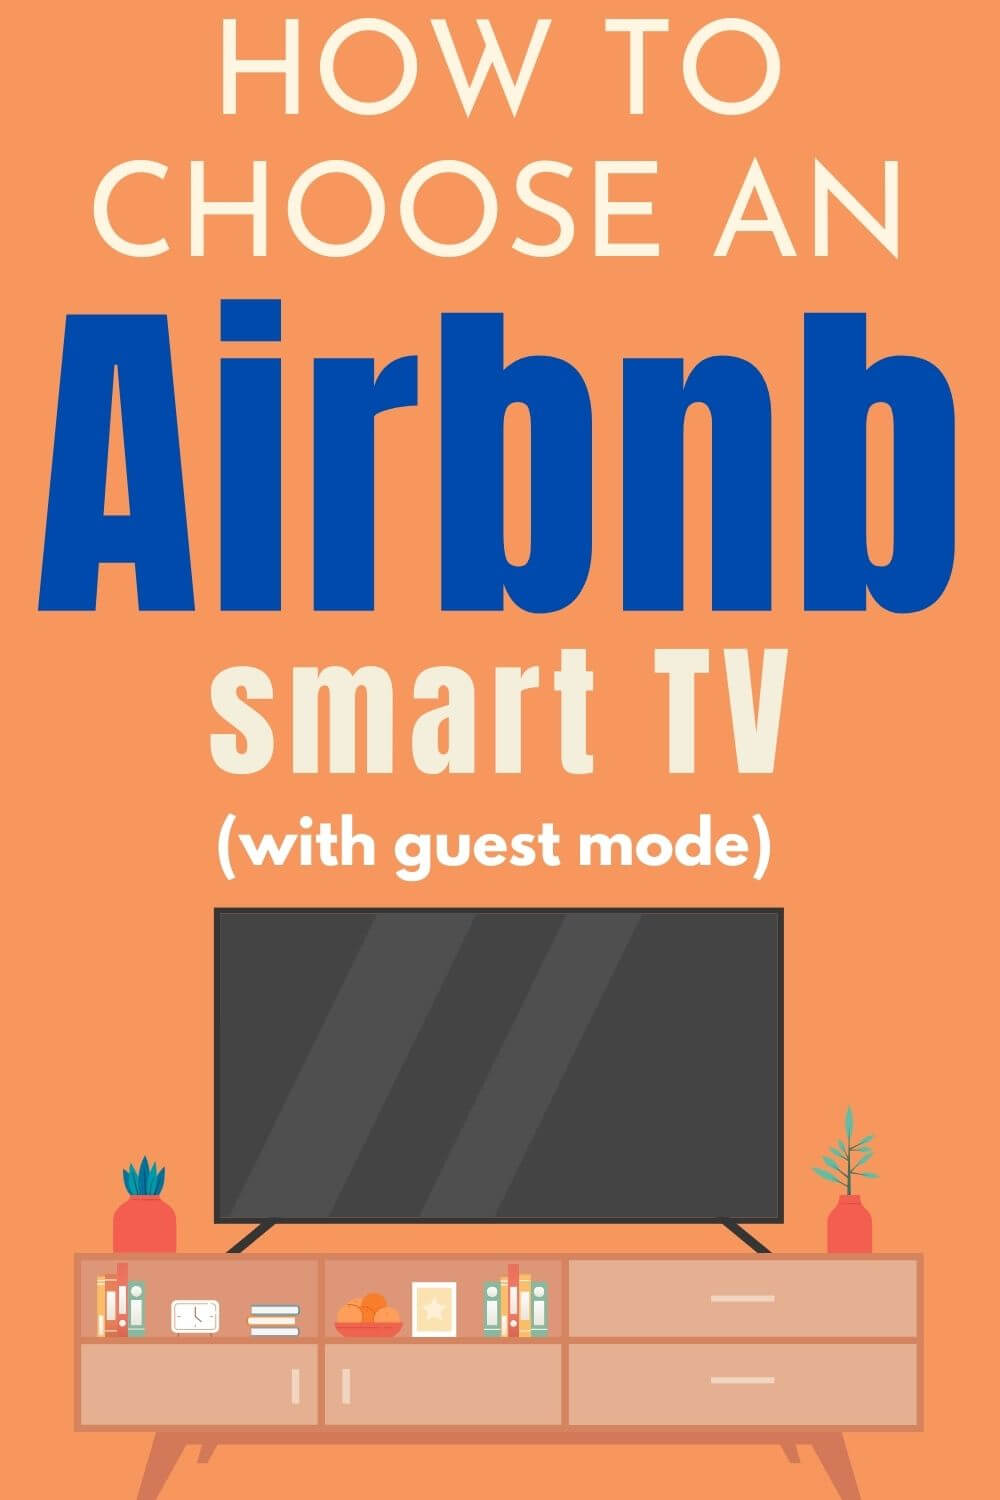 Choosing an Airbnb Smart TV